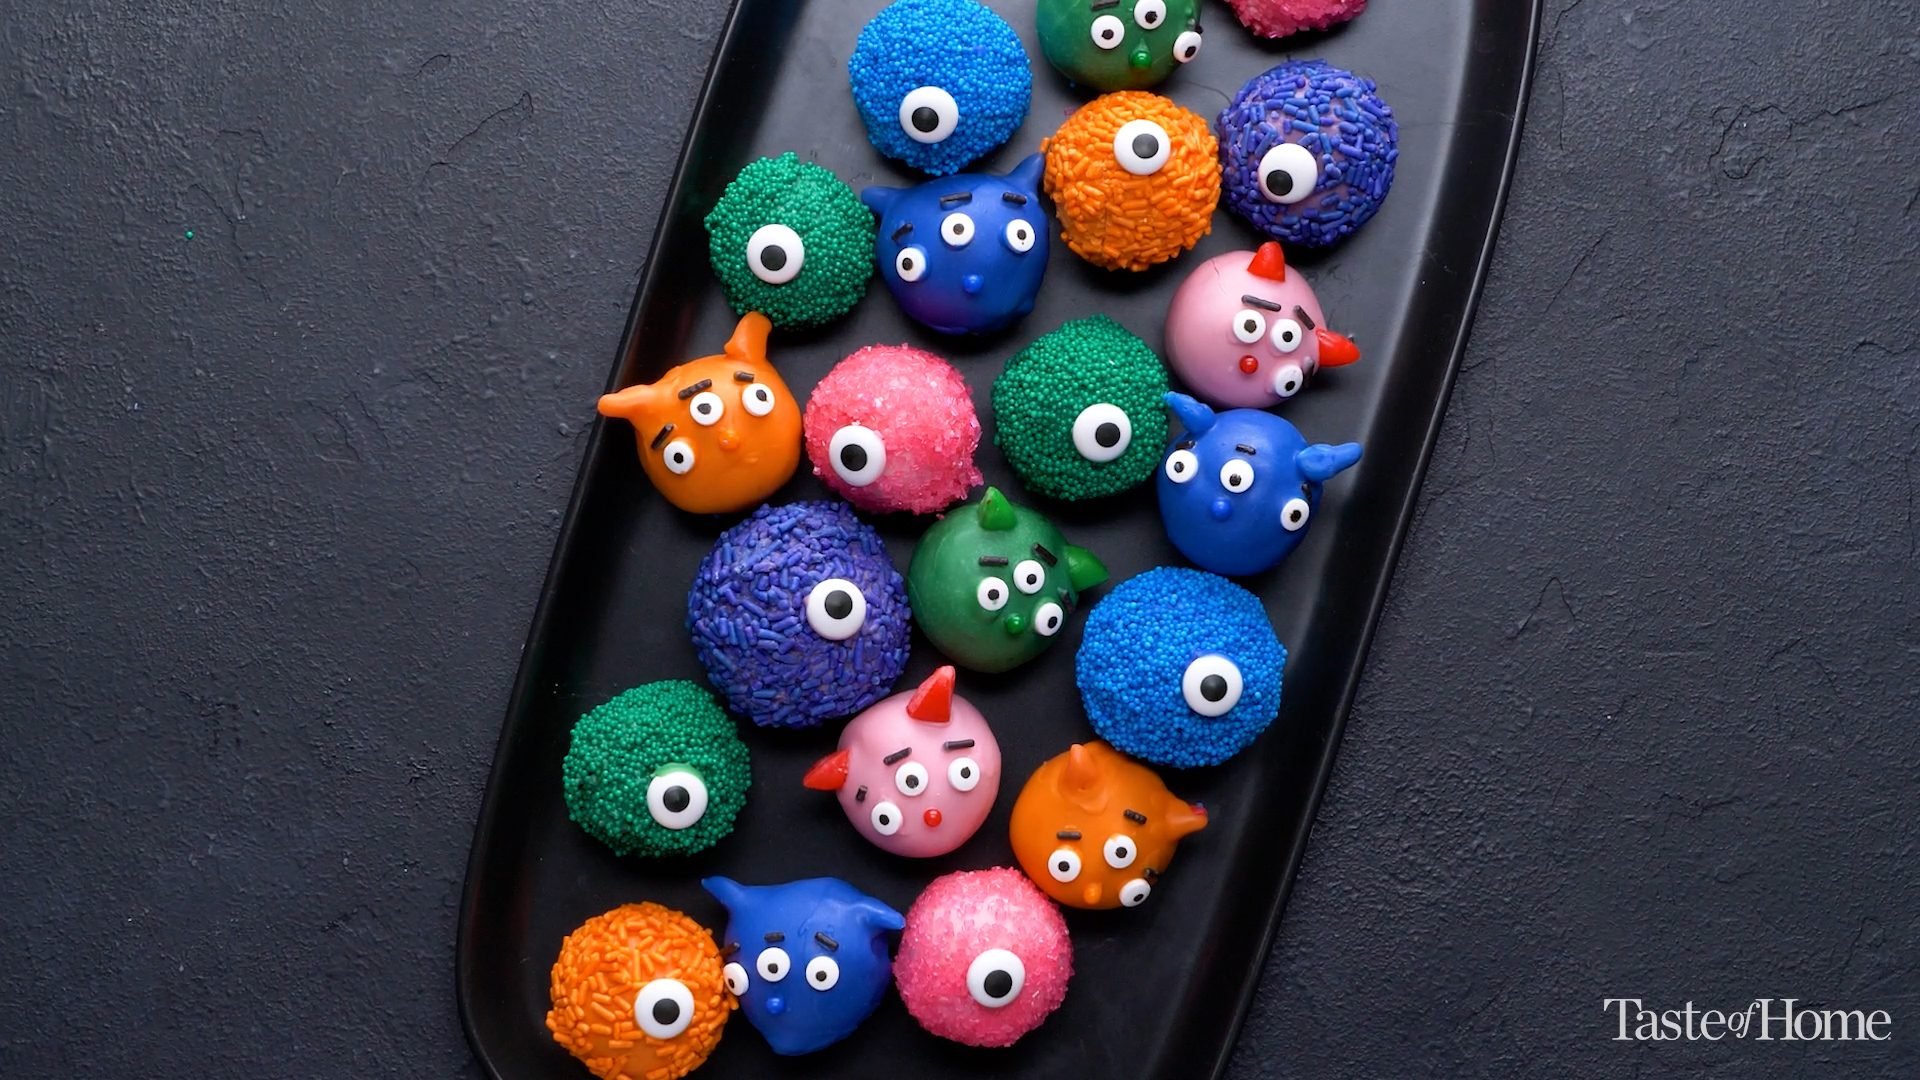 Cake Eyeballs – Crafts to Crumbs